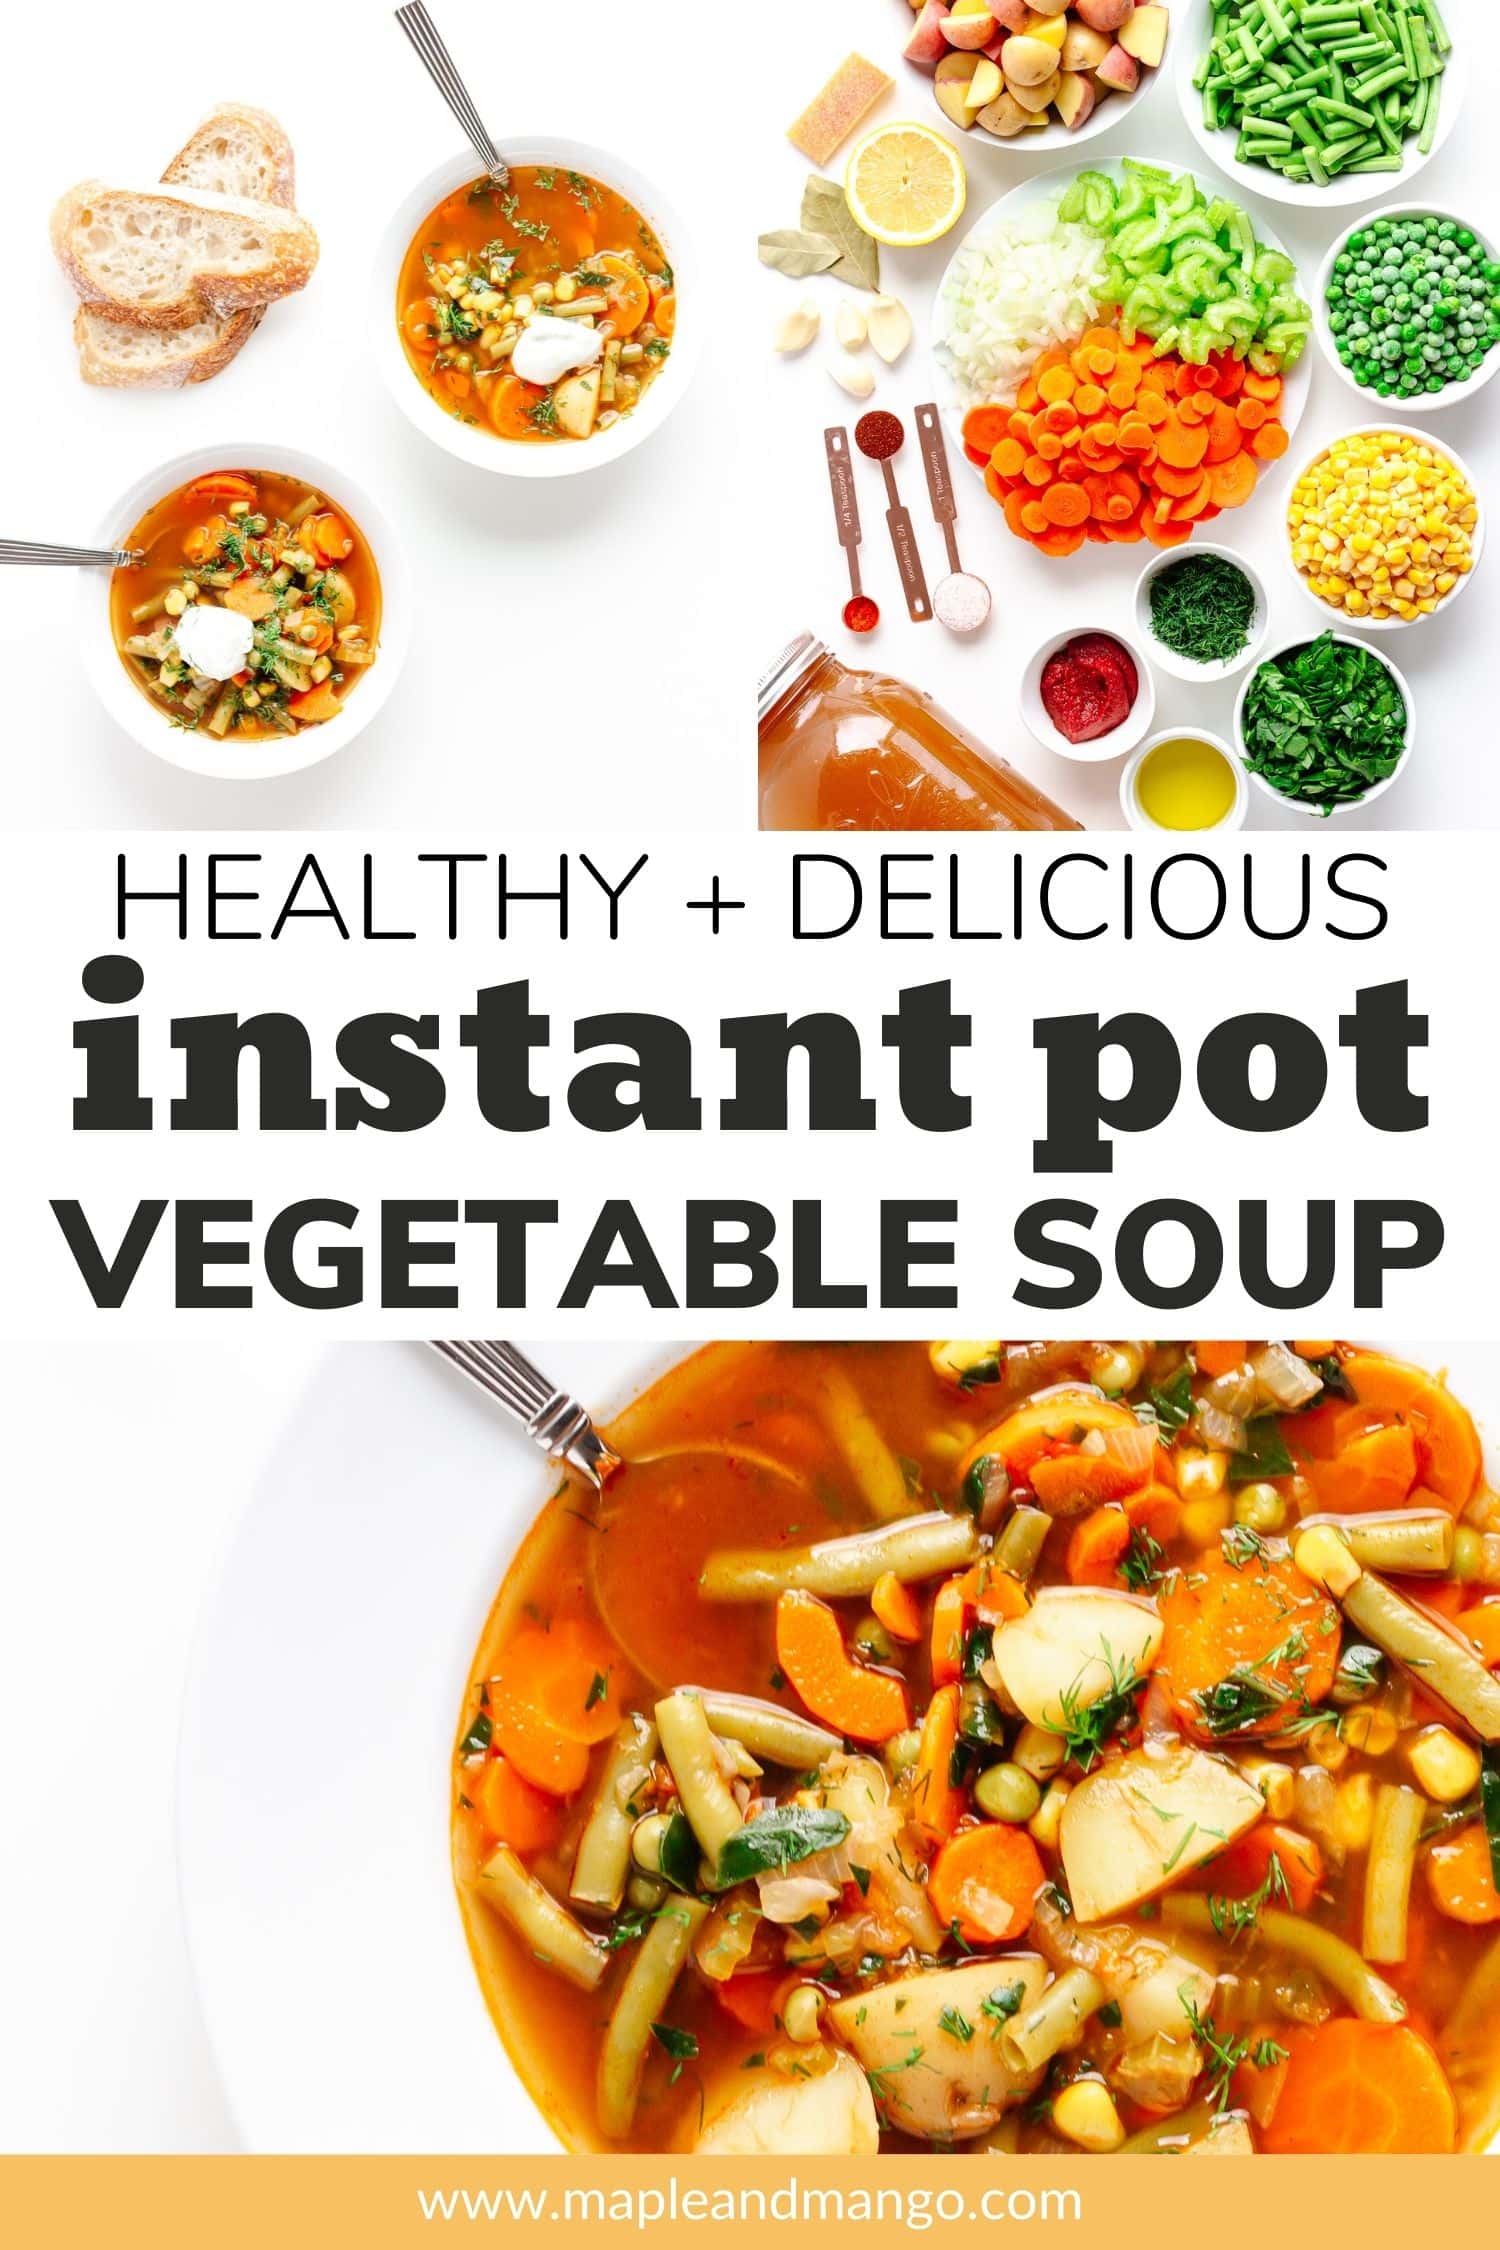 Pinterest graphic for Instant Pot Vegetable Soup recipe.